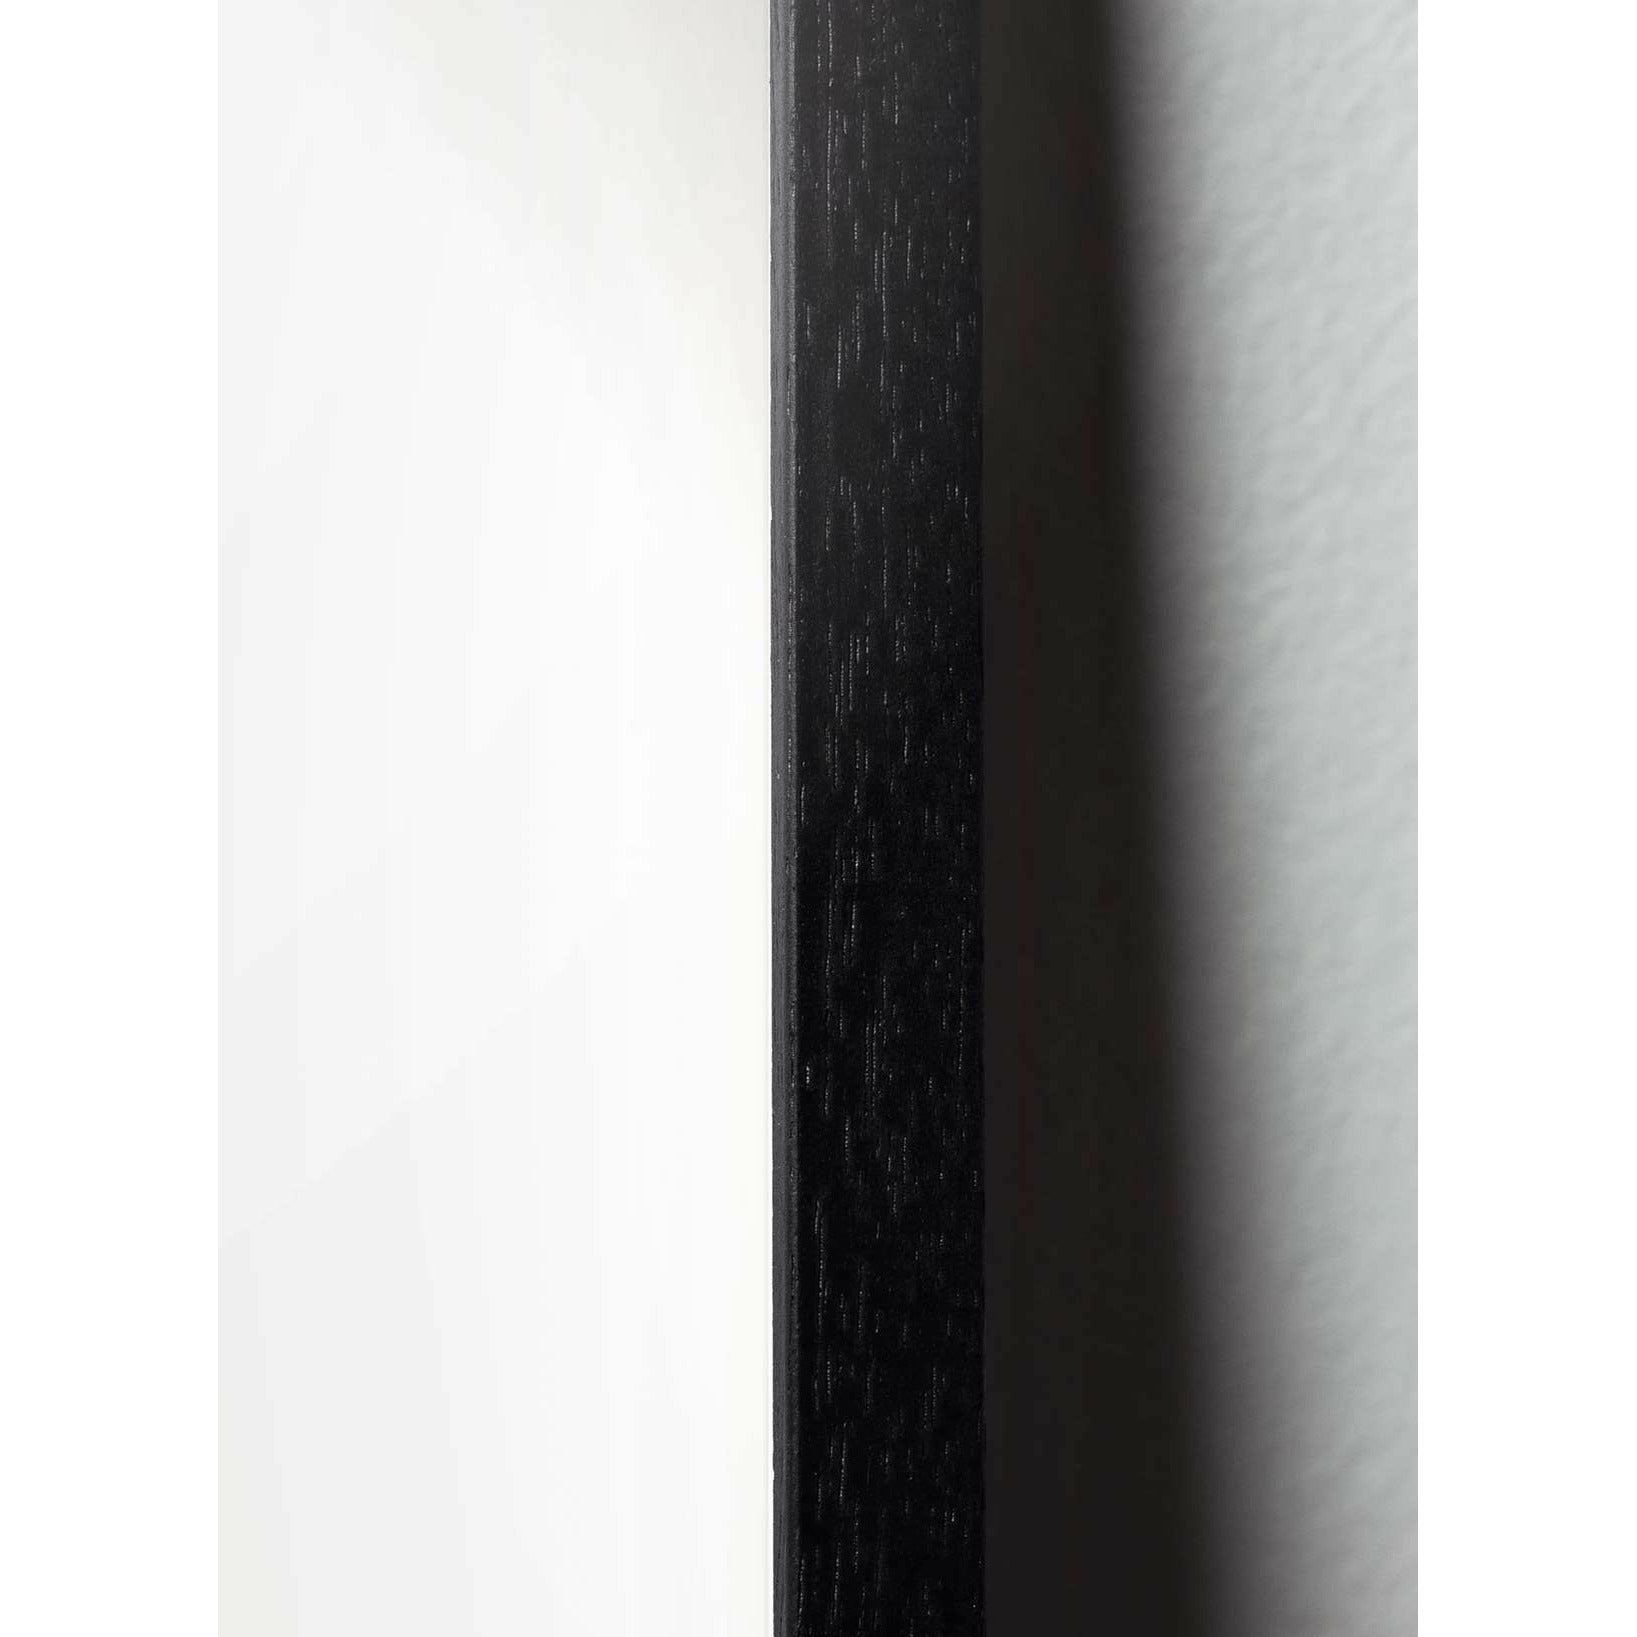 Brainchild Nallebjörnslinje affisch, ram i svart -målat trä 30x40 cm, vit bakgrund